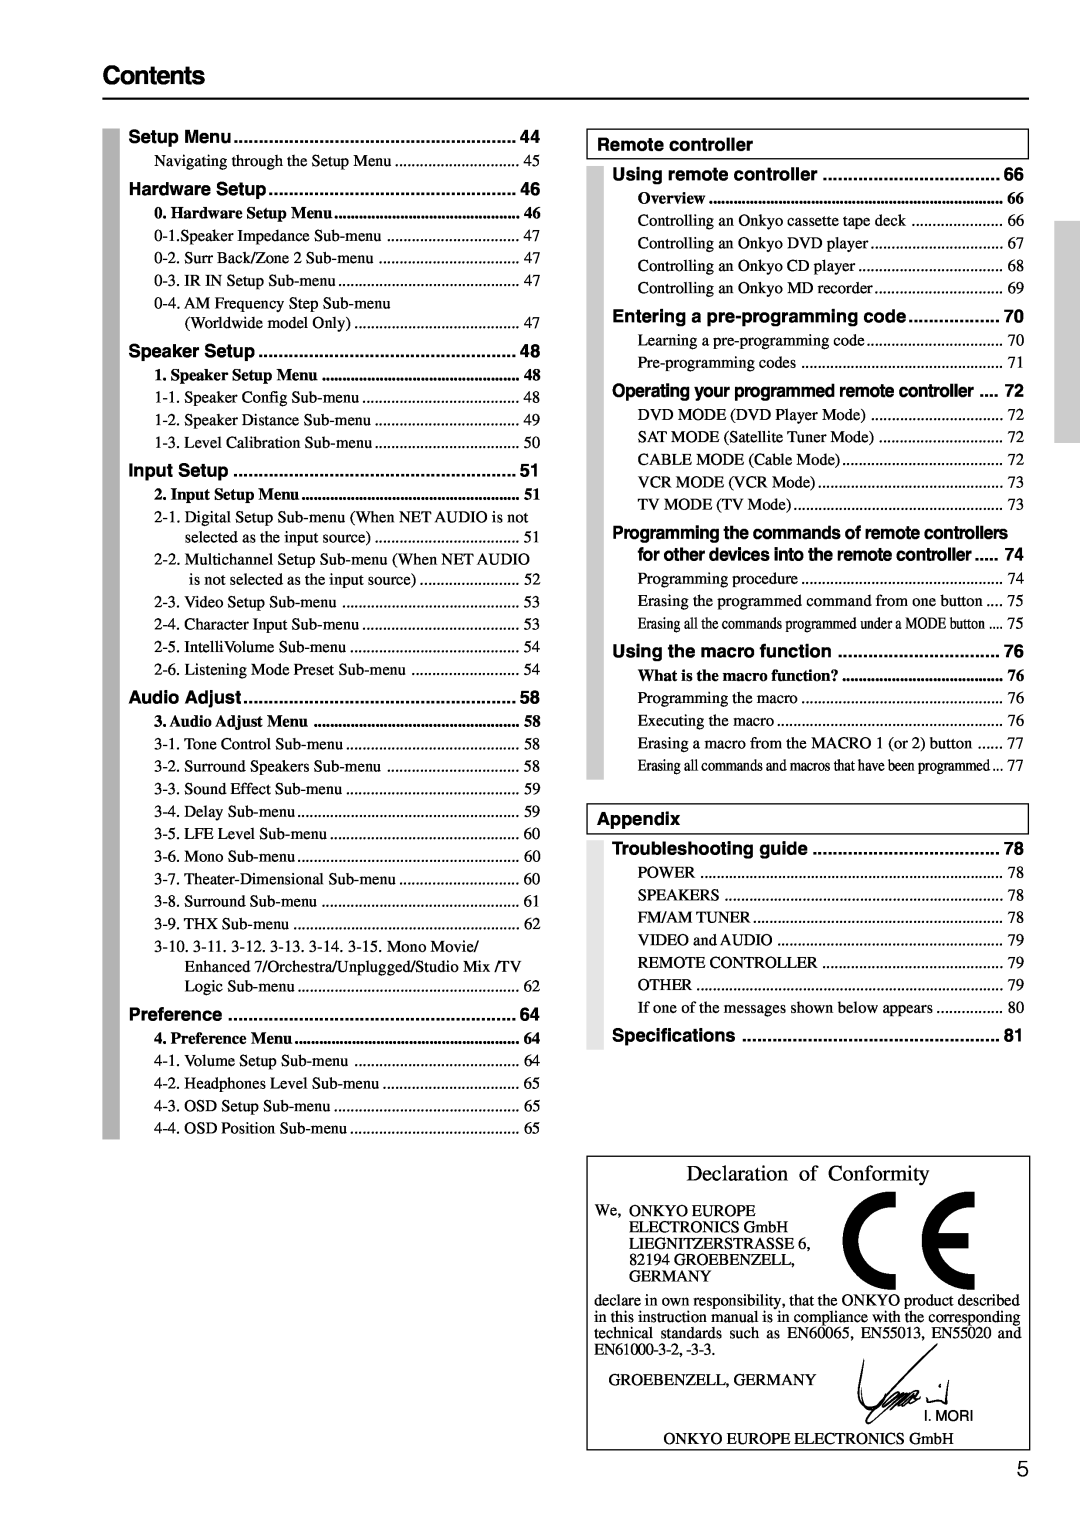 Onkyo TX-NR900E instruction manual Contents, Declaration of Conformity, Remote controller, Appendix 